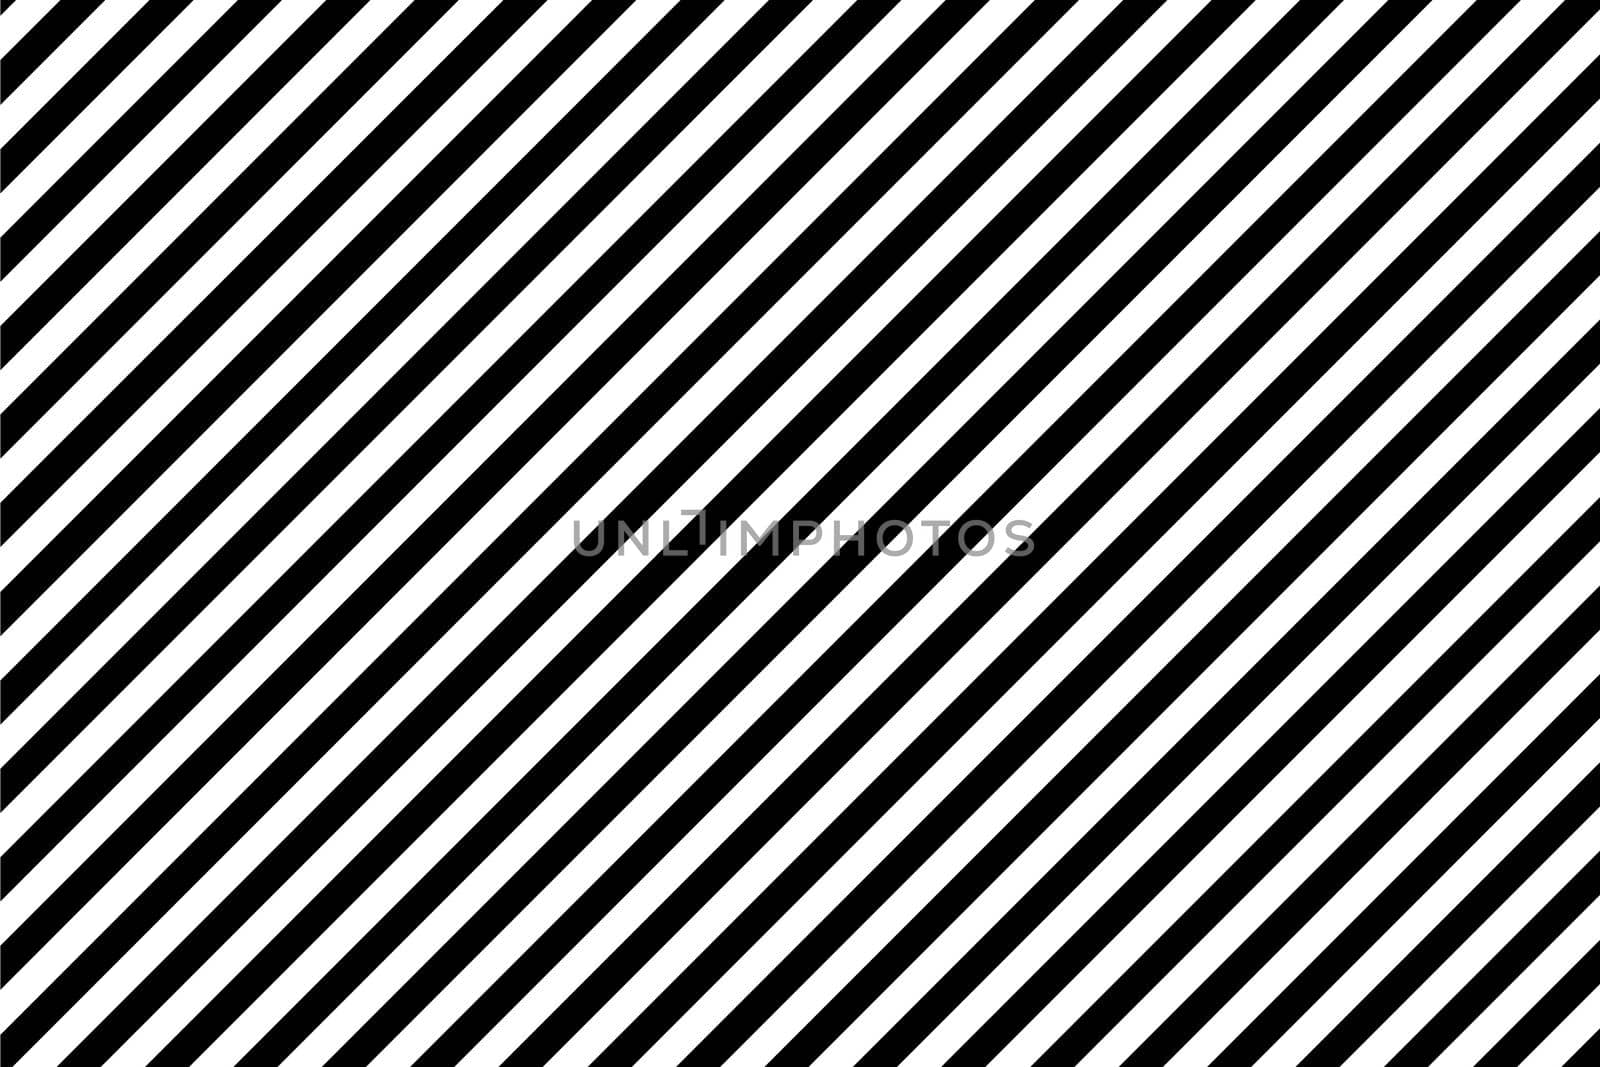 Black and white diagonal stripes paper chart background